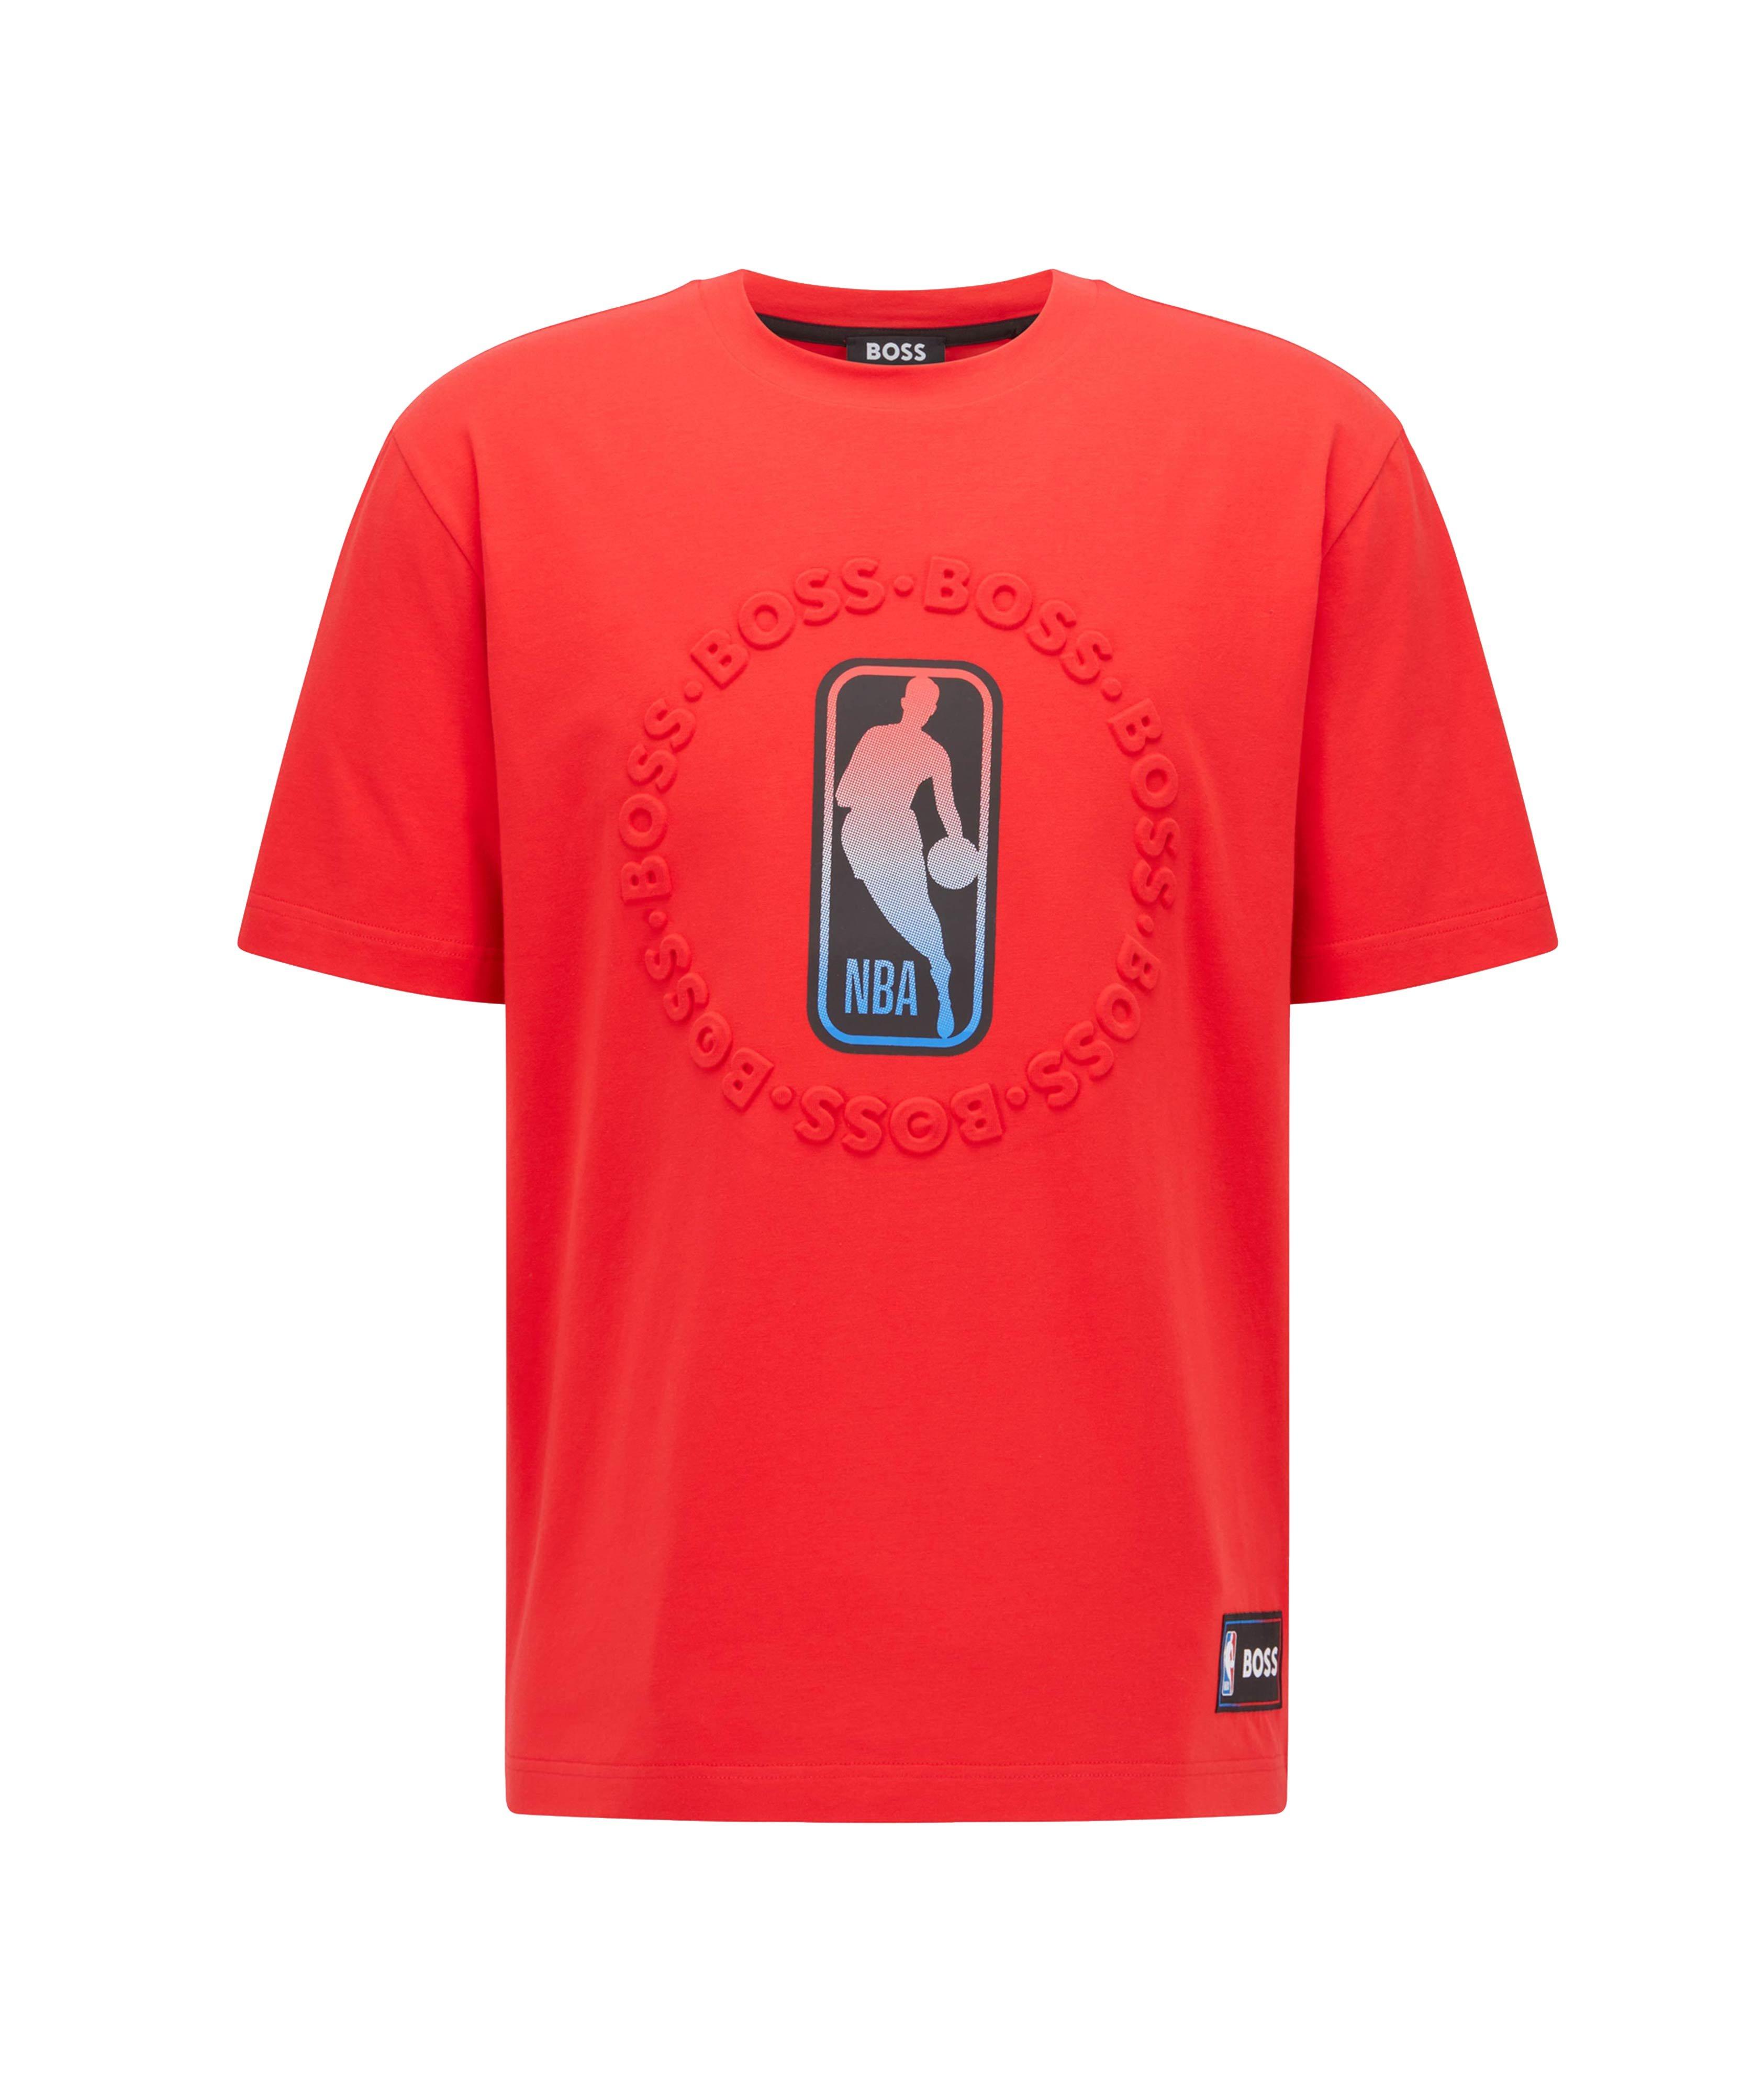 BOSS X NBA Logo T-Shirt  image 0